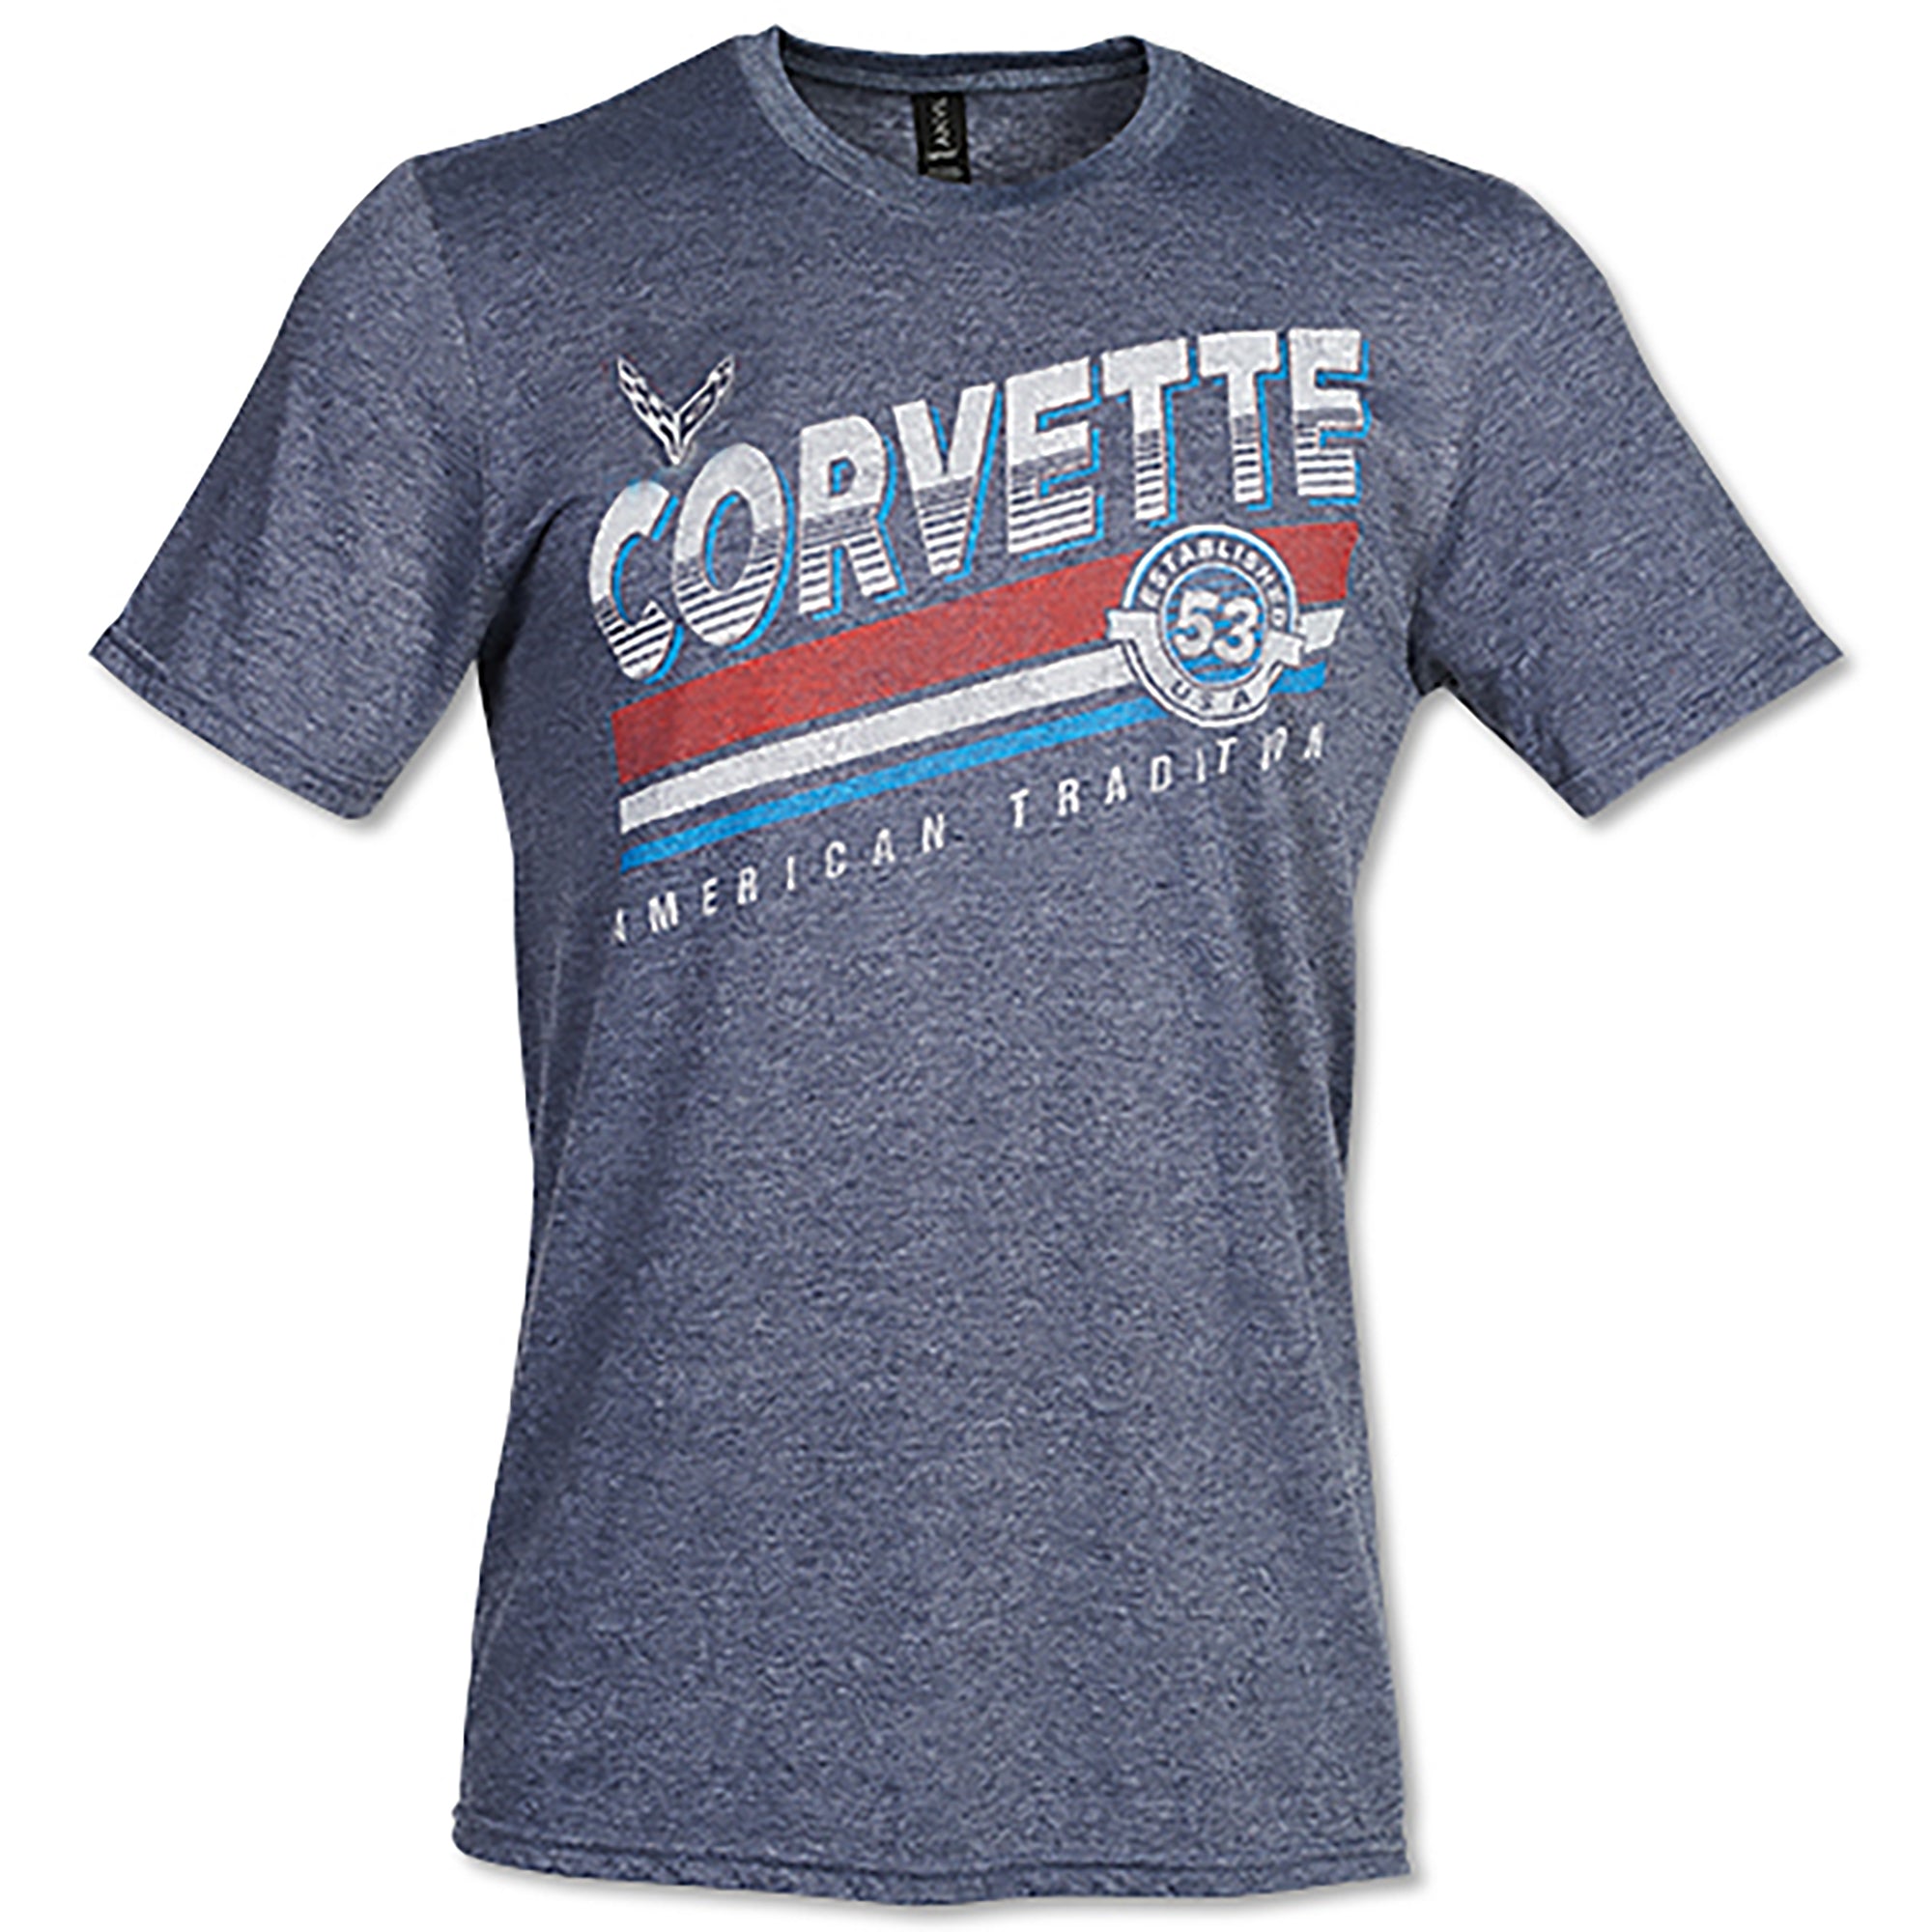 Corvette American Tradition T-Shirt - Vette1 - Misc. Men's T-Shirts